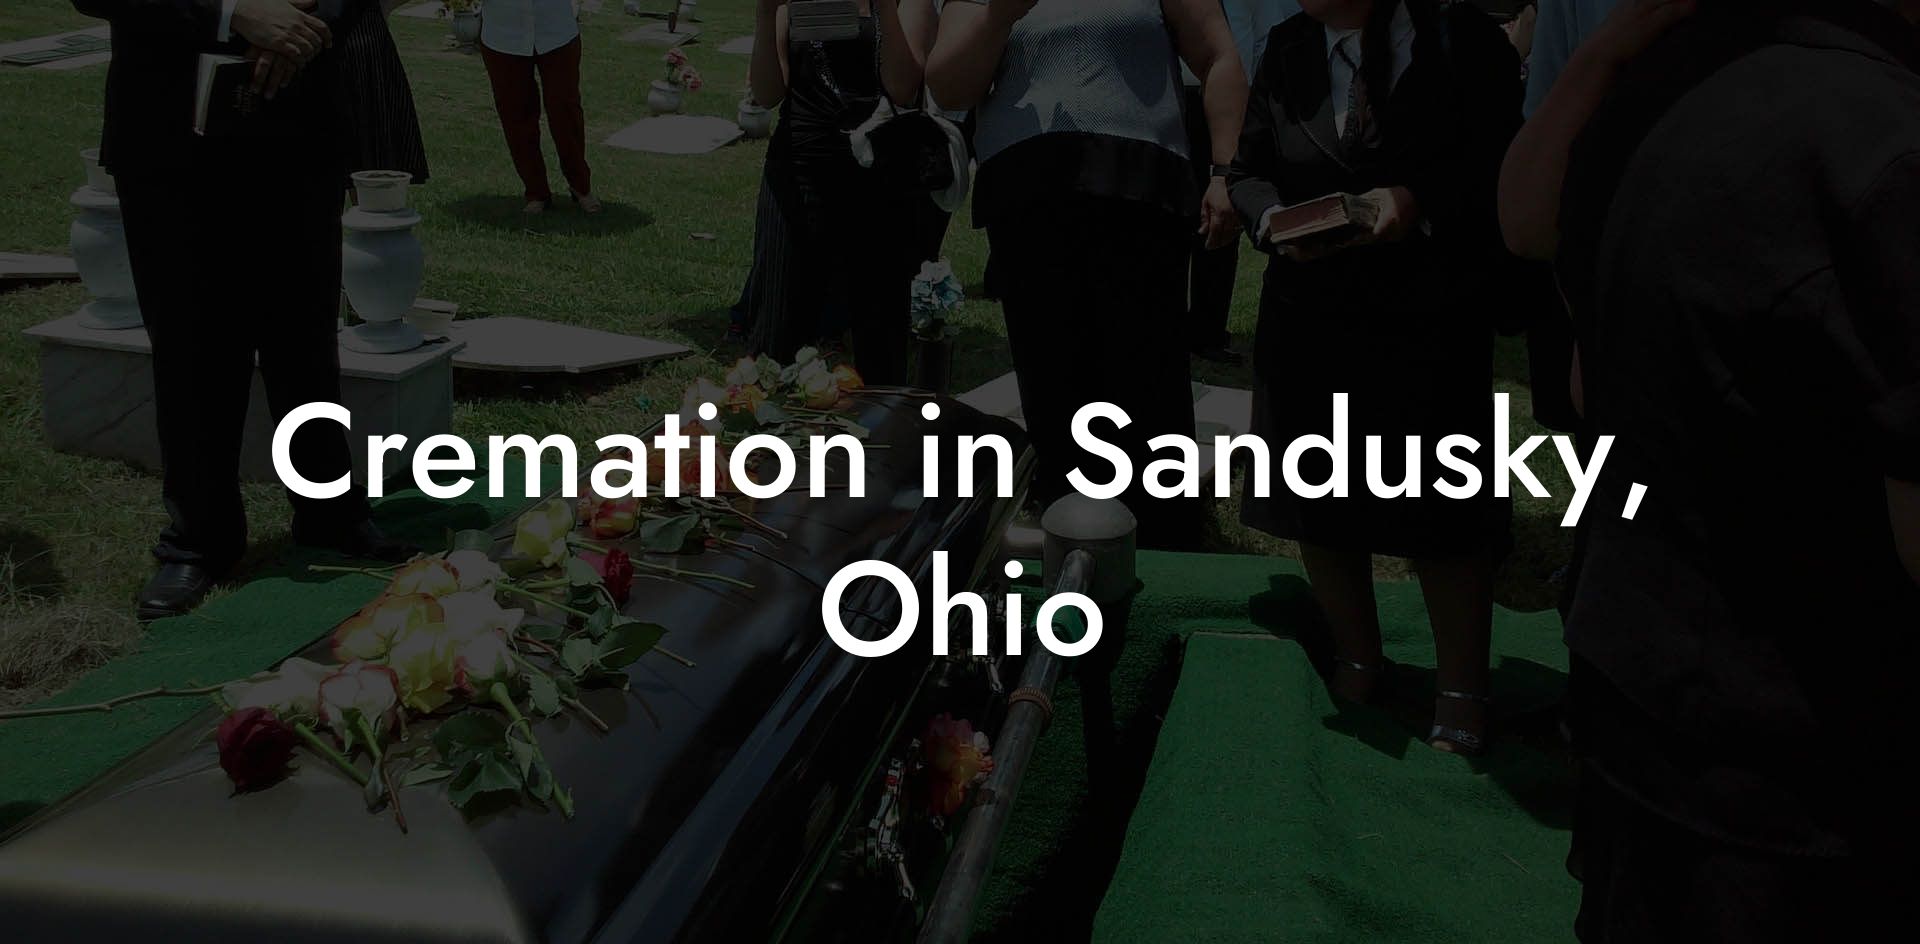 Cremation in Sandusky, Ohio